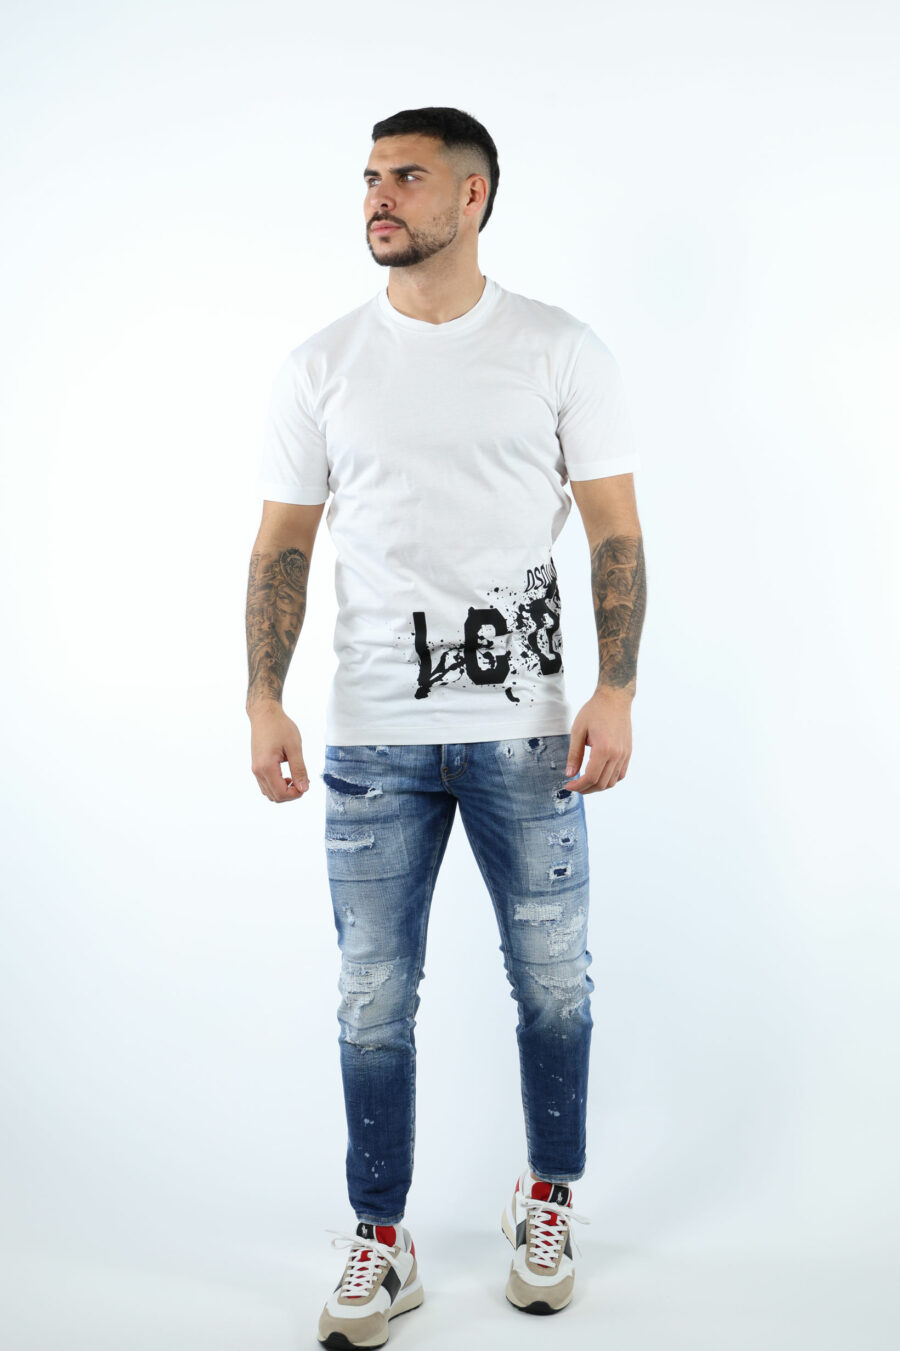 White t-shirt with "icon splash" maxilogo underneath - 106668